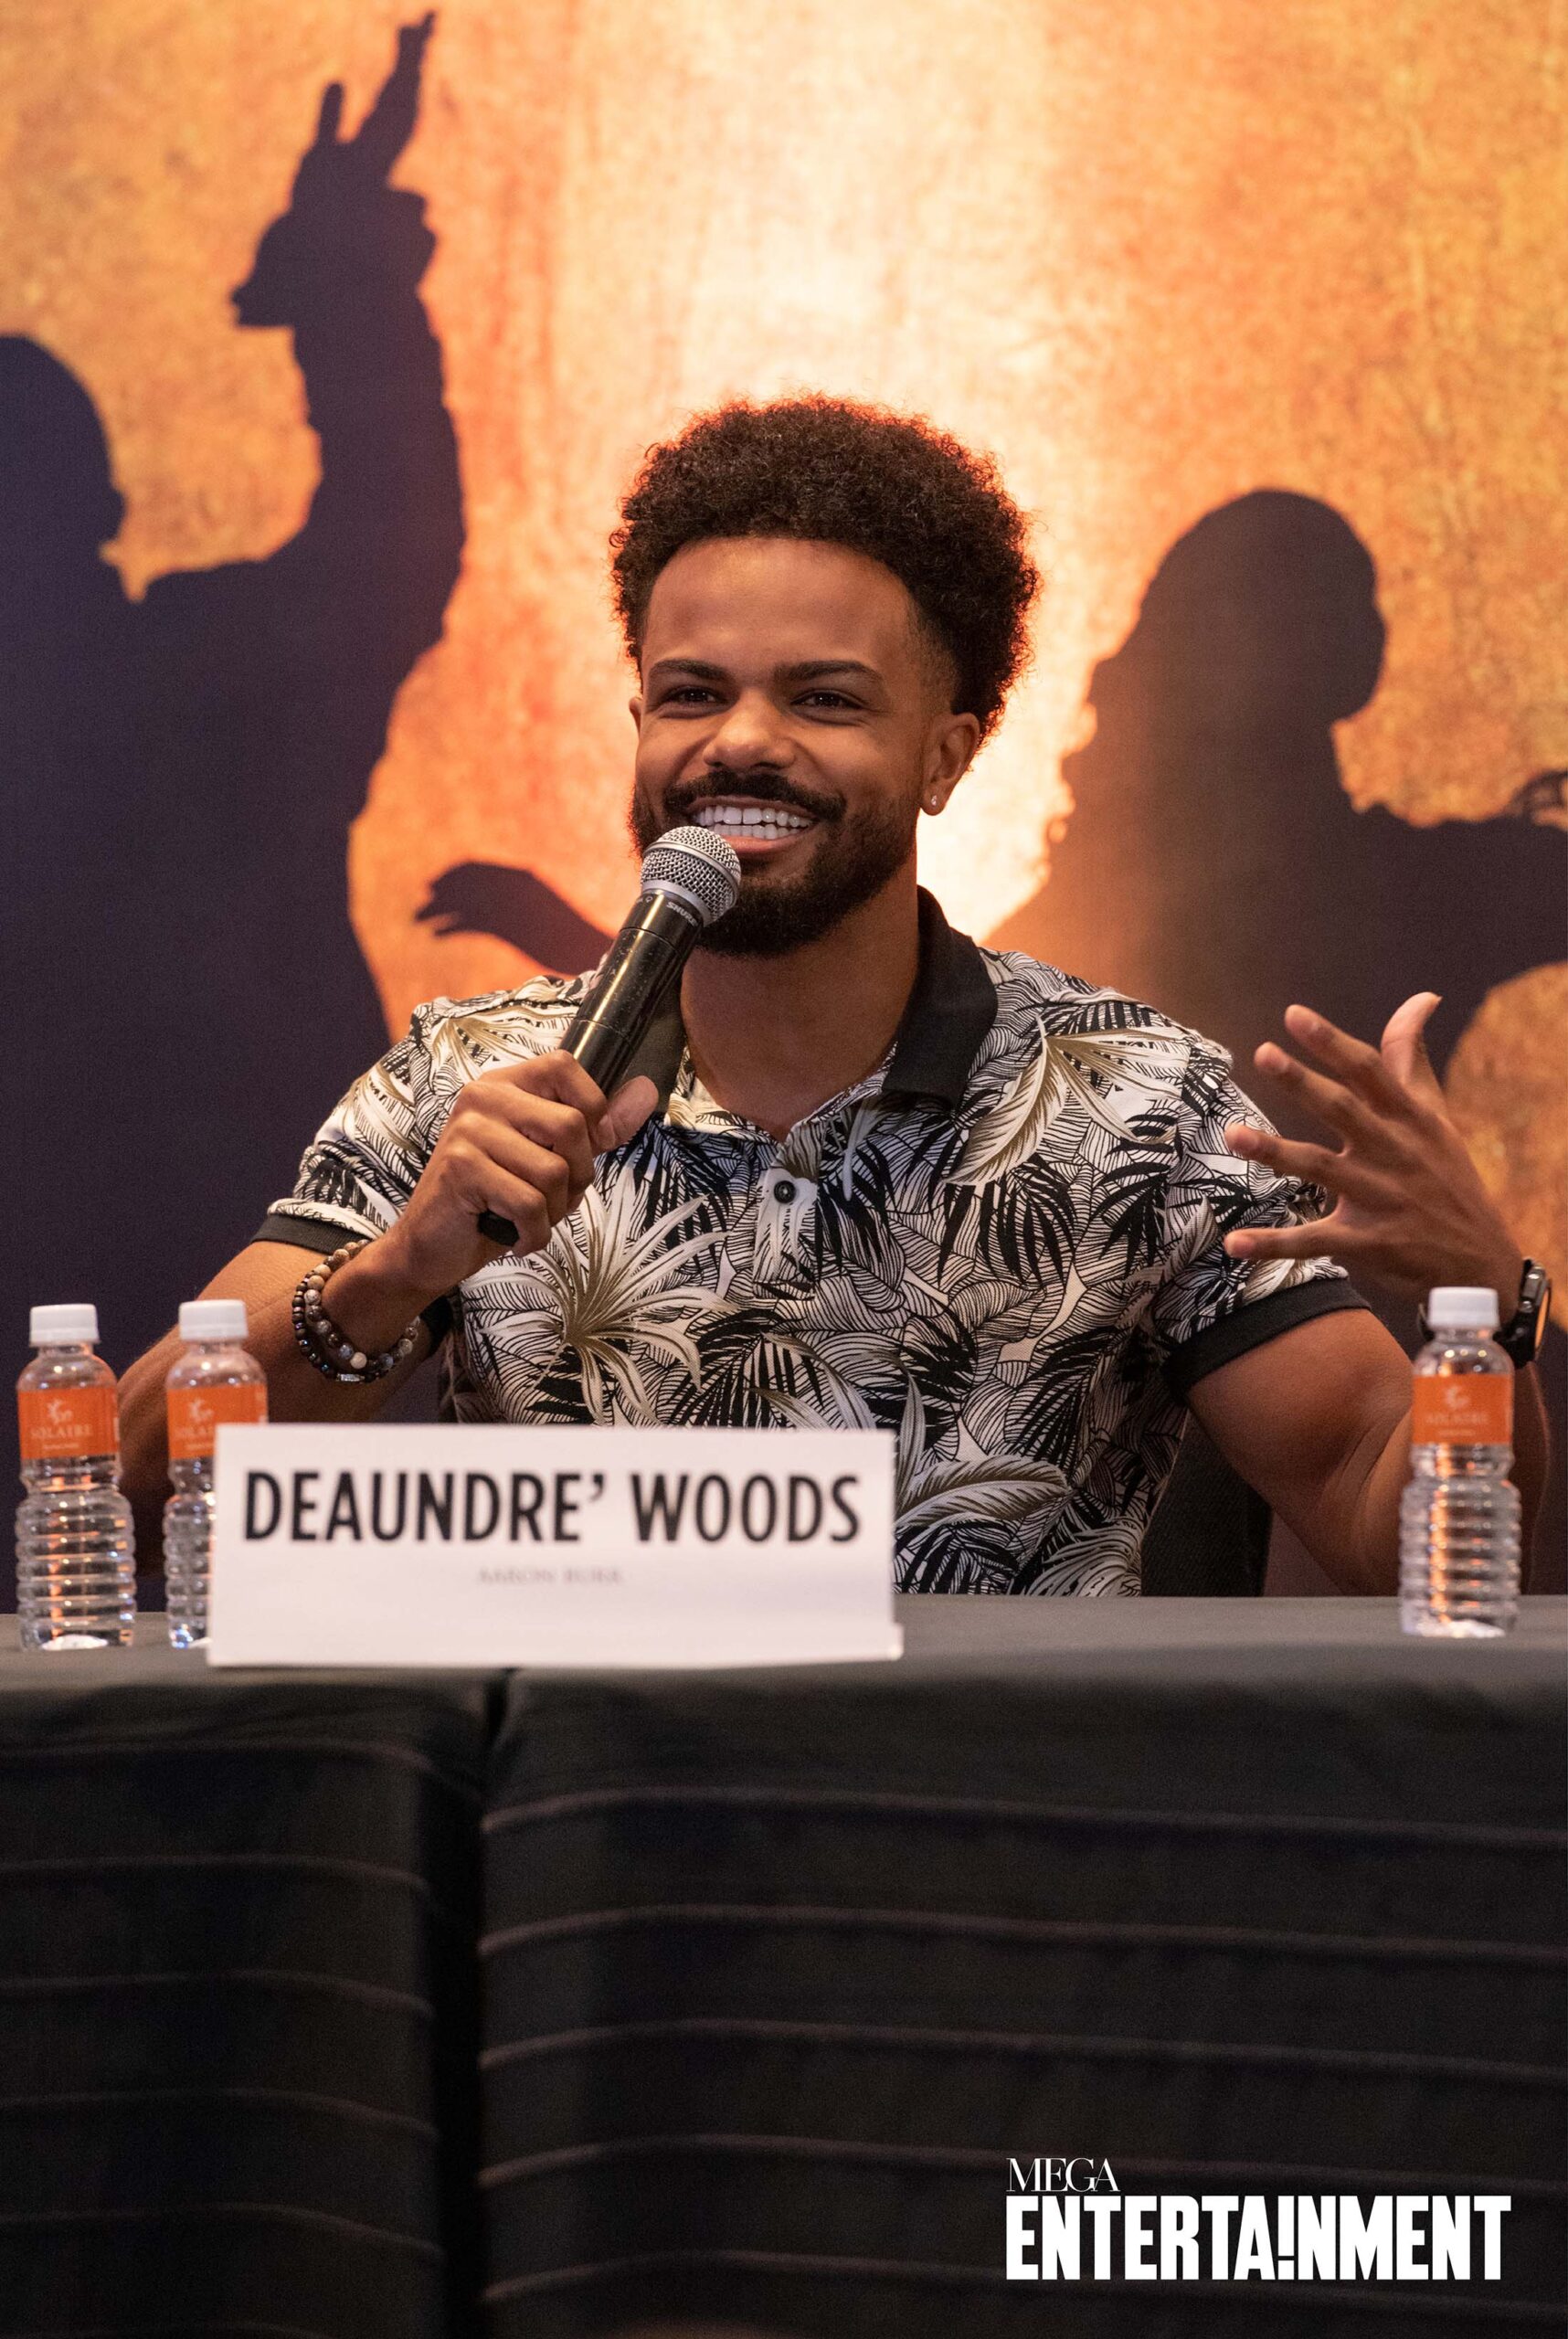 The Hamilton International Cast Deaundre’ Woods